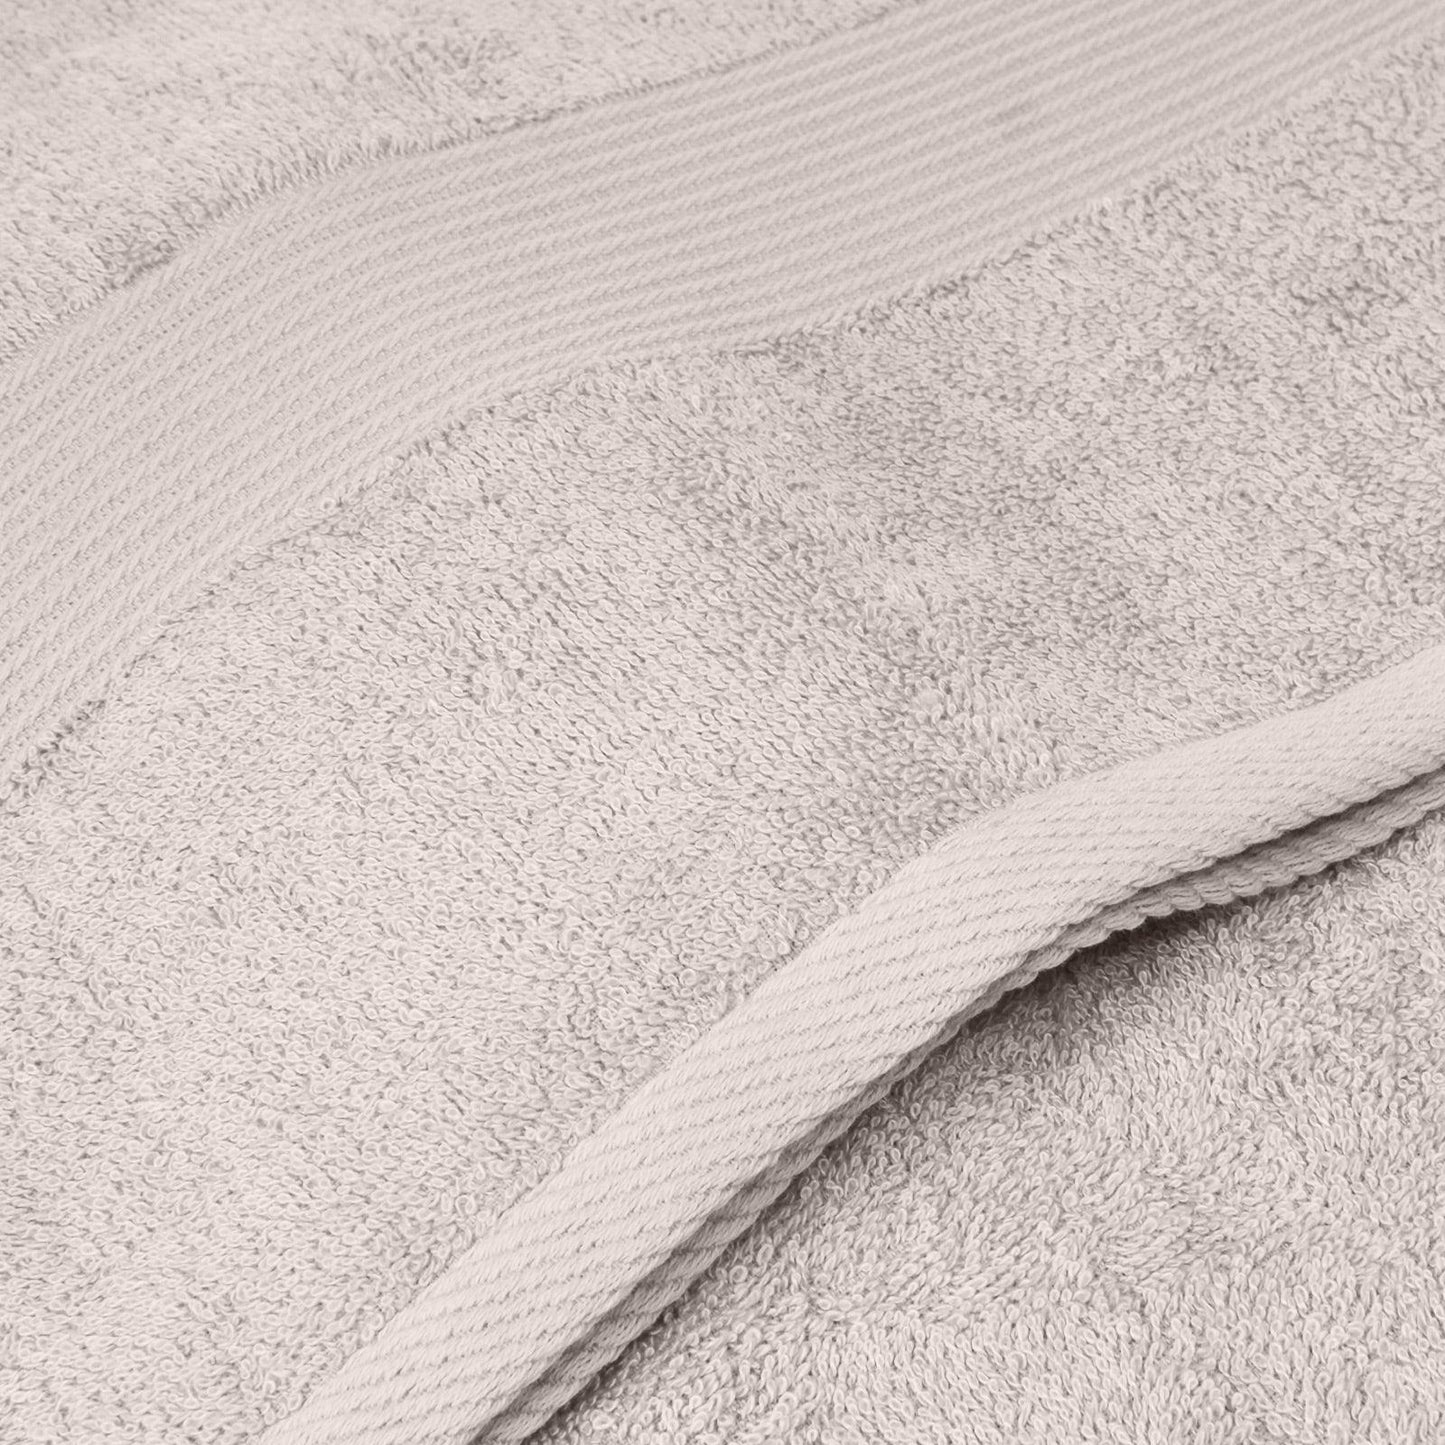 Royal Comfort 4 Piece Cotton Bamboo Towel Set 450GSM Luxurious Absorbent Plush - Beige